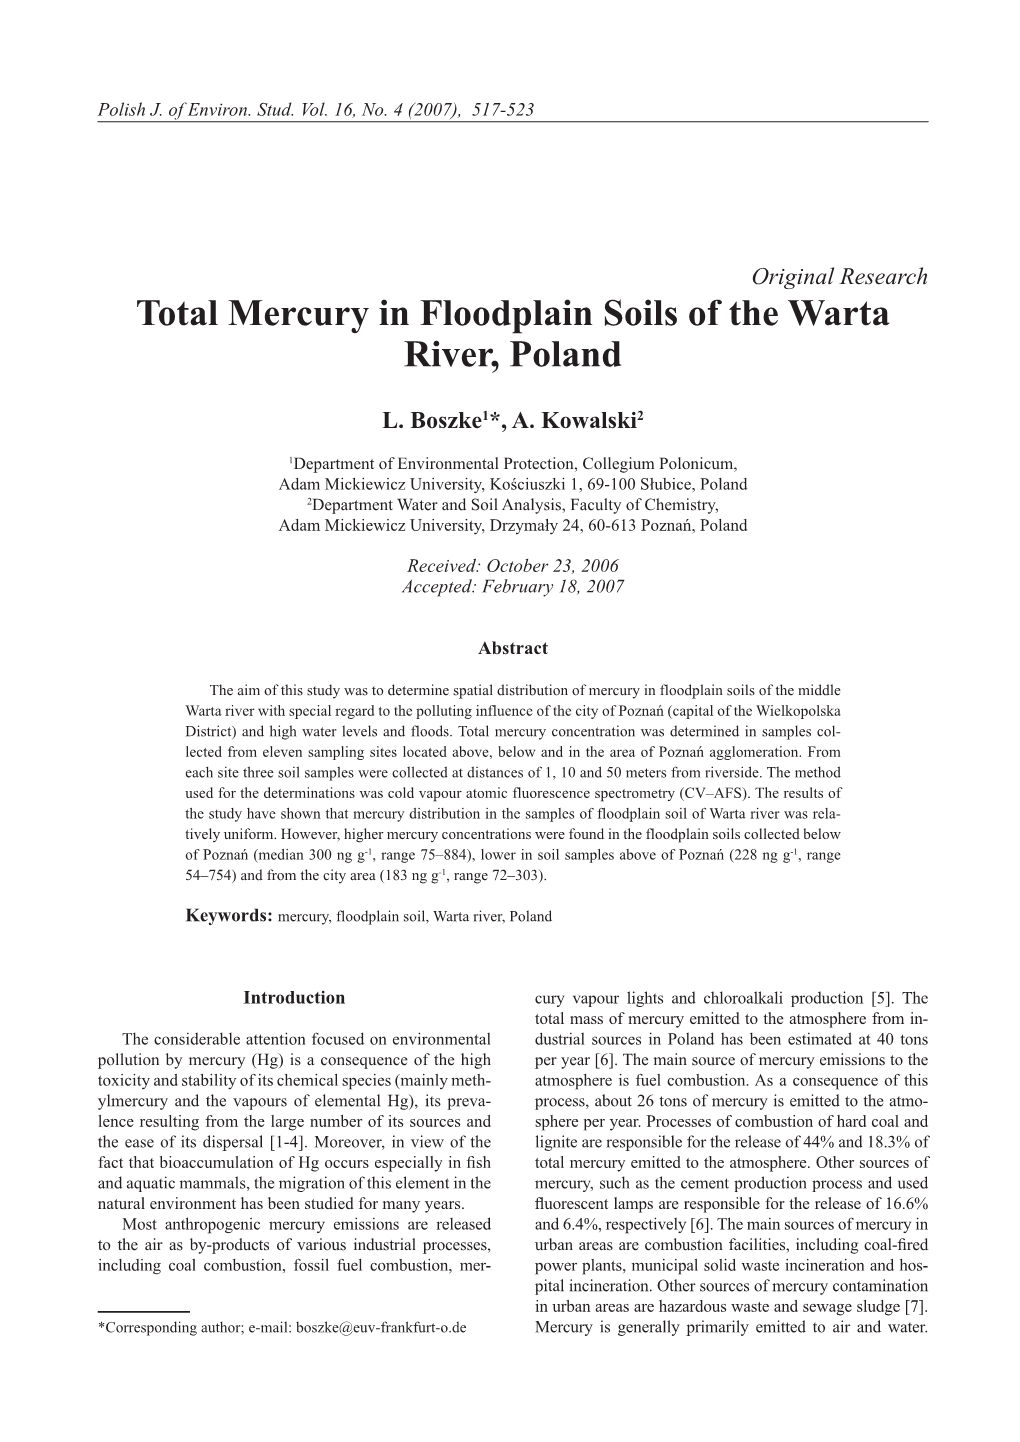 Total Mercury in Floodplain Soils of the Warta River, Poland